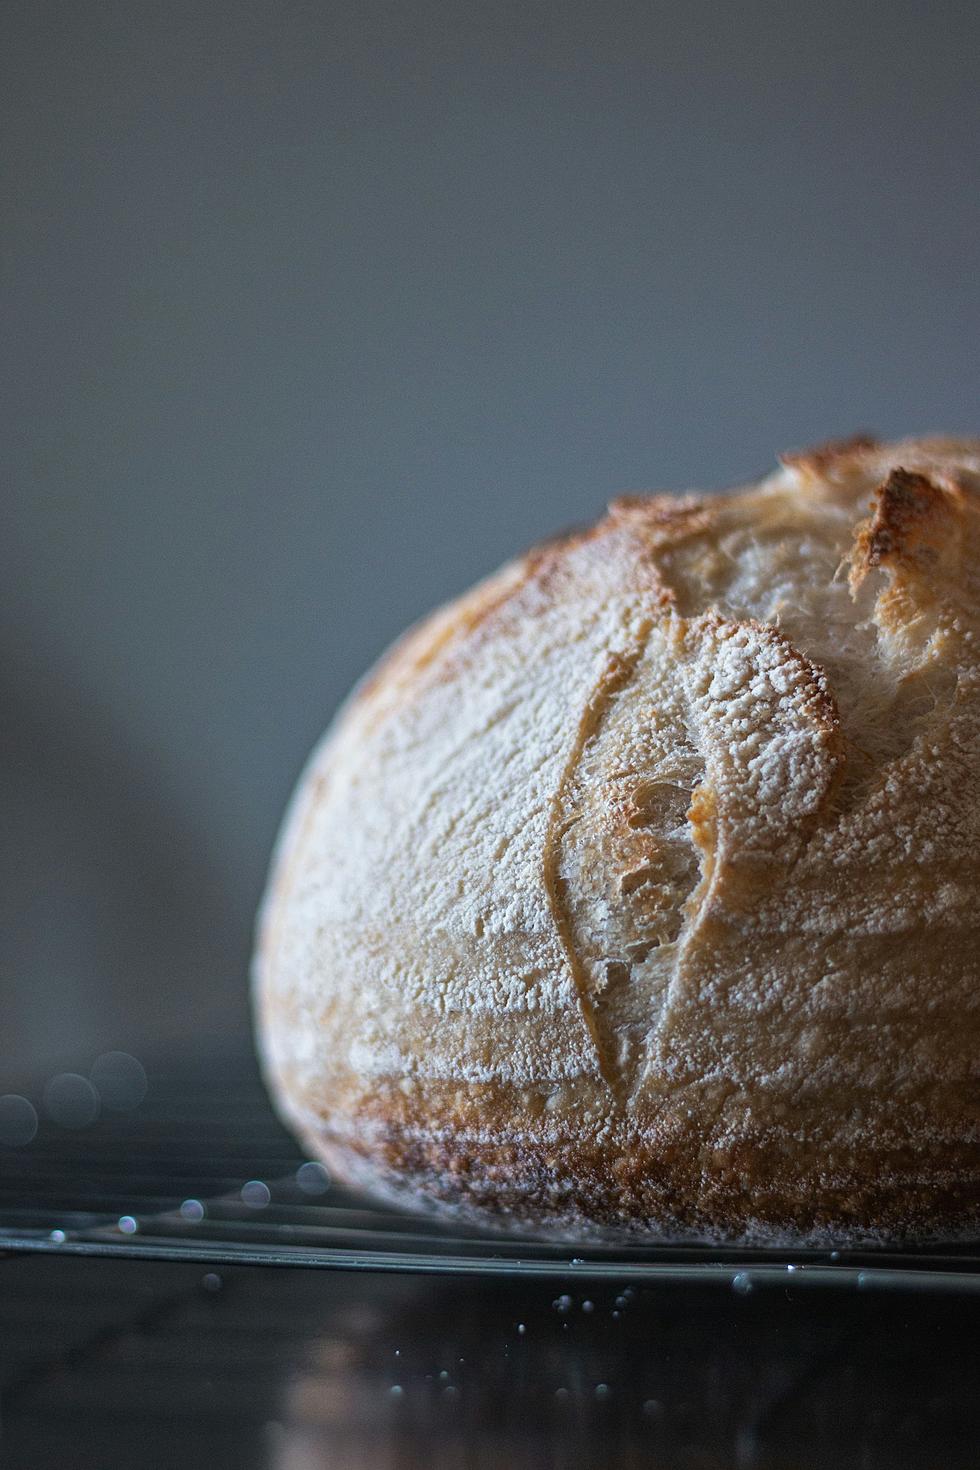 Minnesota’s New Craze: Making Sourdough Bread